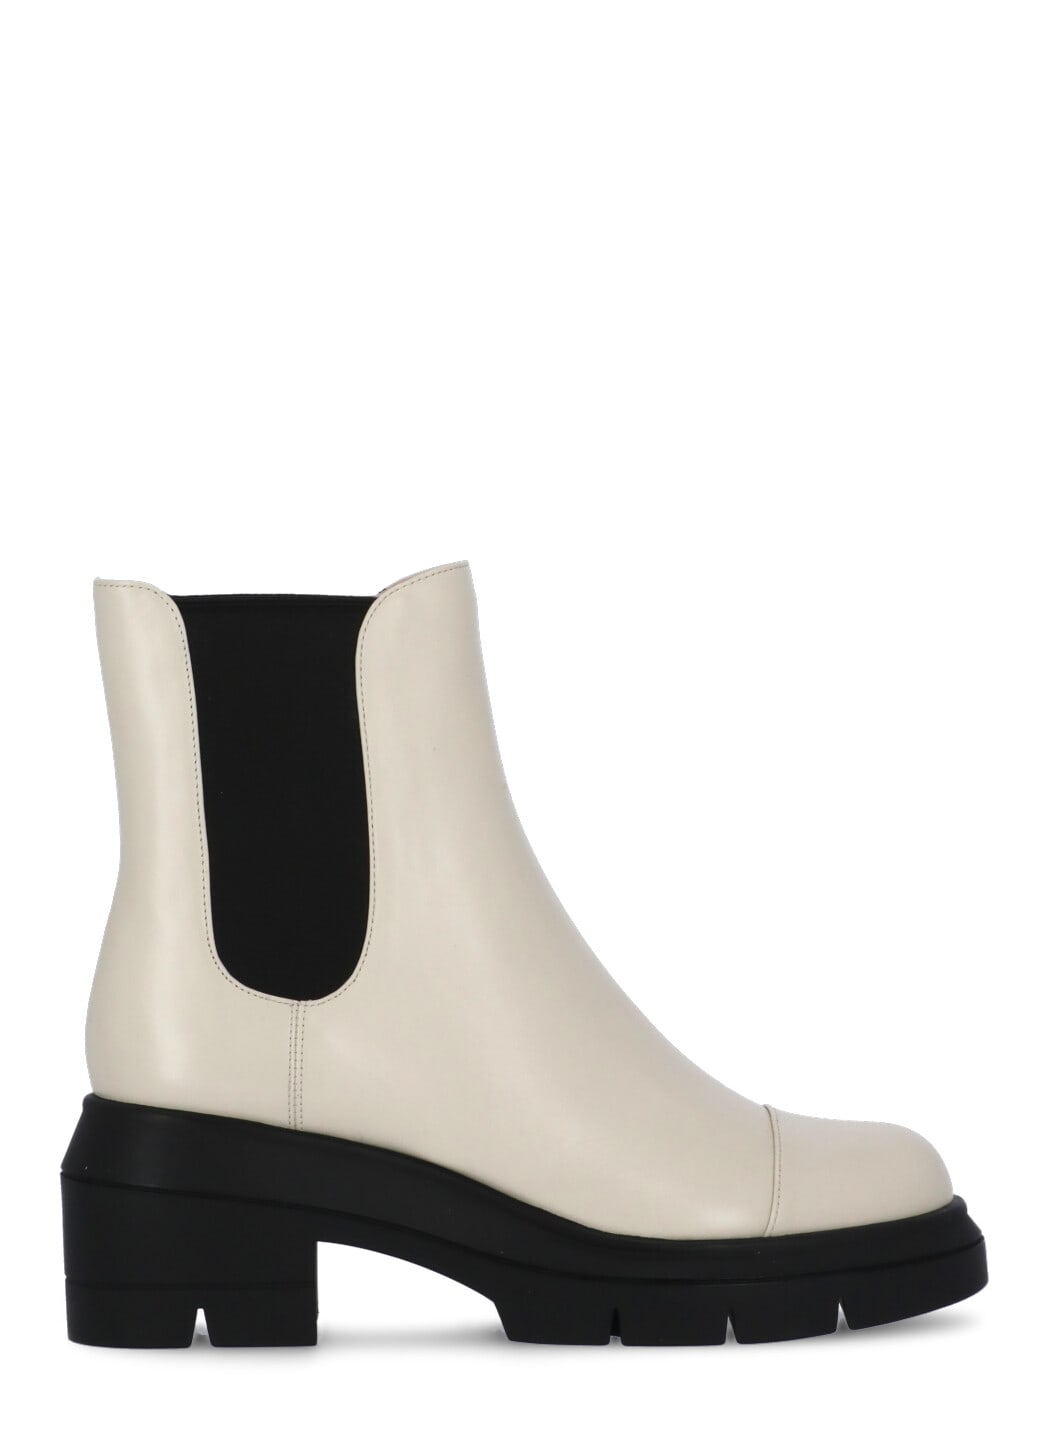 Buy Stuart Weitzman Norah Chelsea Boot online, shop Stuart Weitzman shoes with free shipping